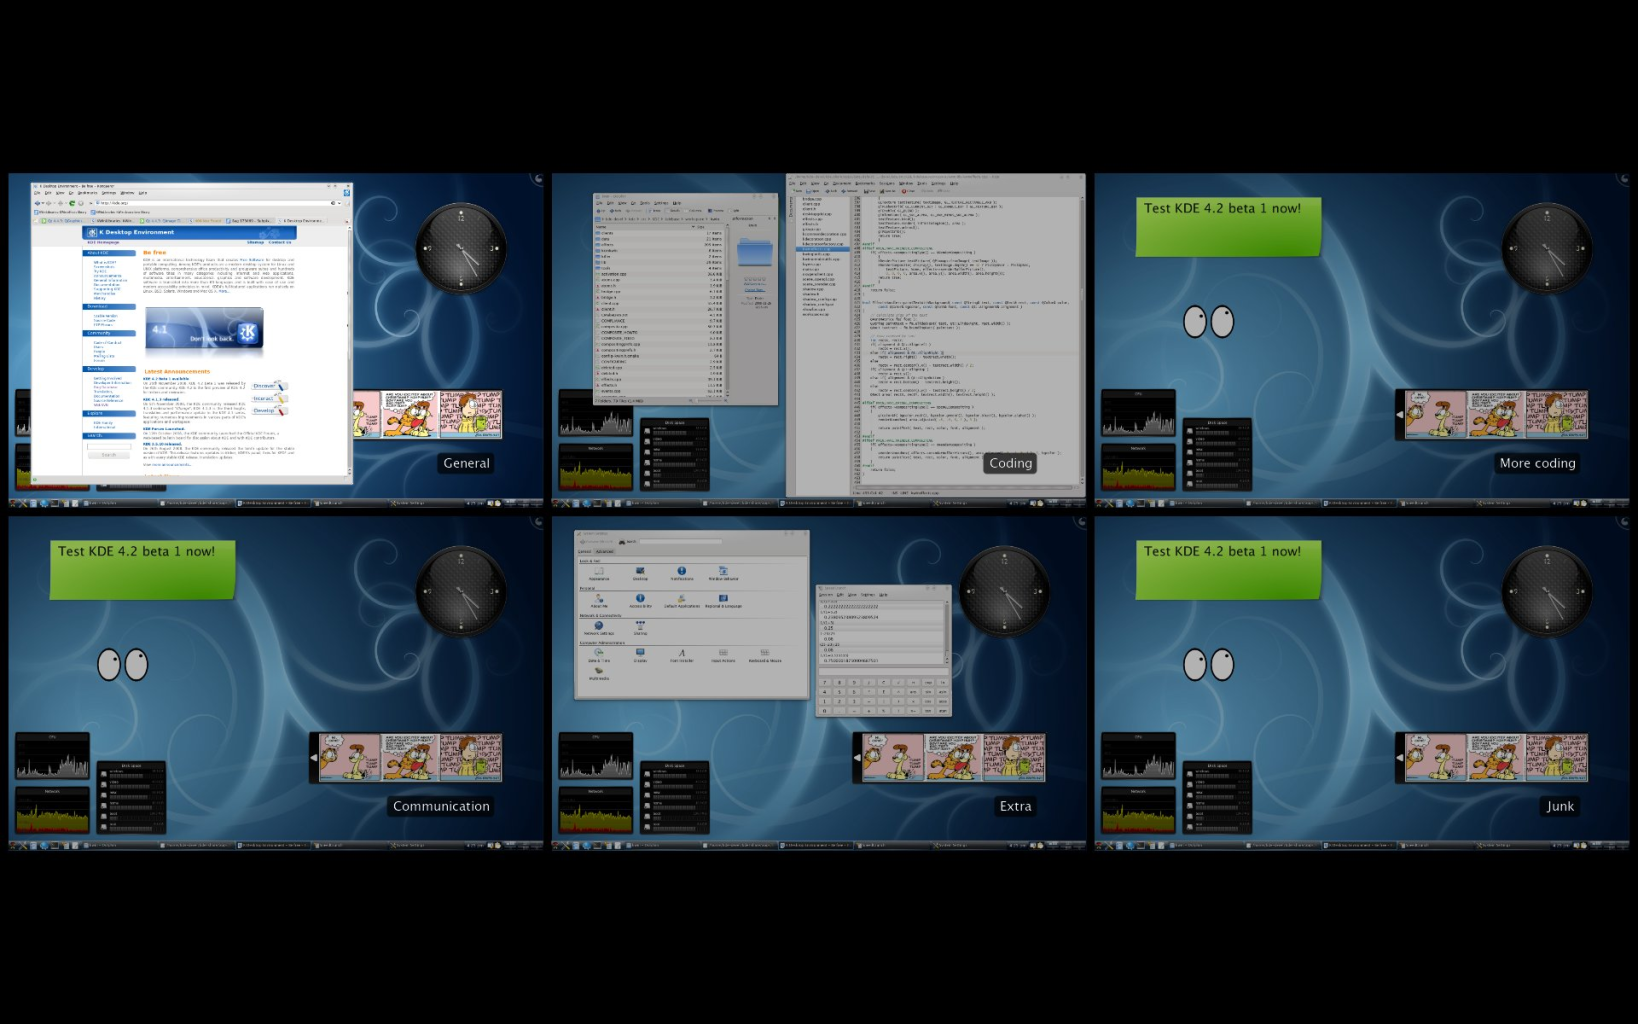 KDE_4 2_beta_desktop_grille